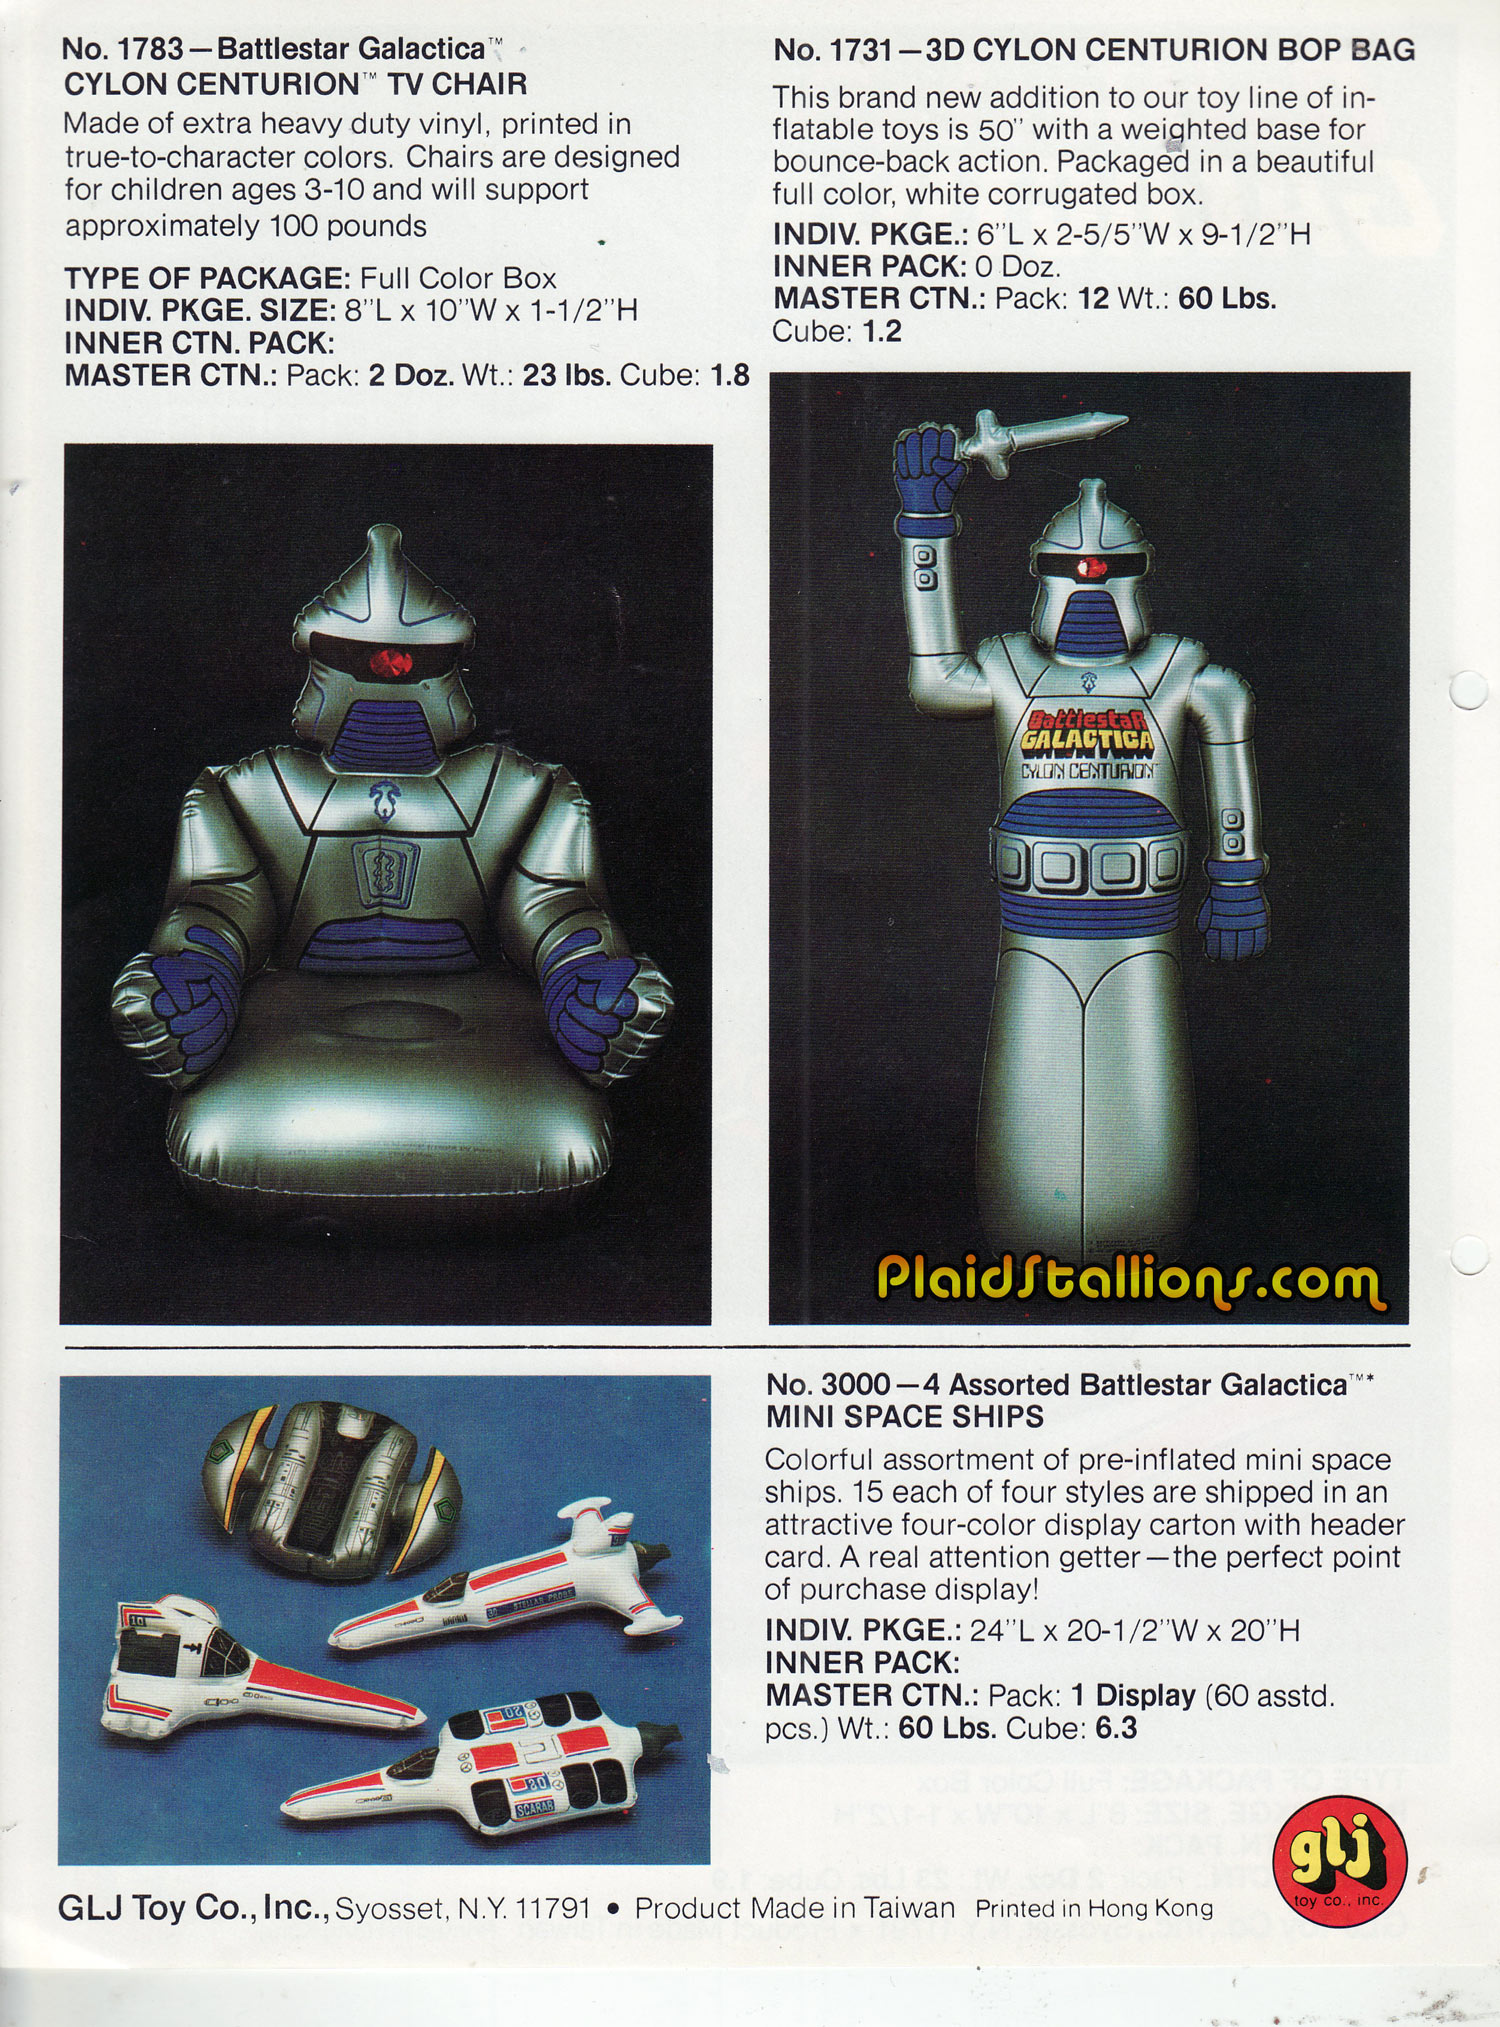 GLJ Battlestar Galactica Toys